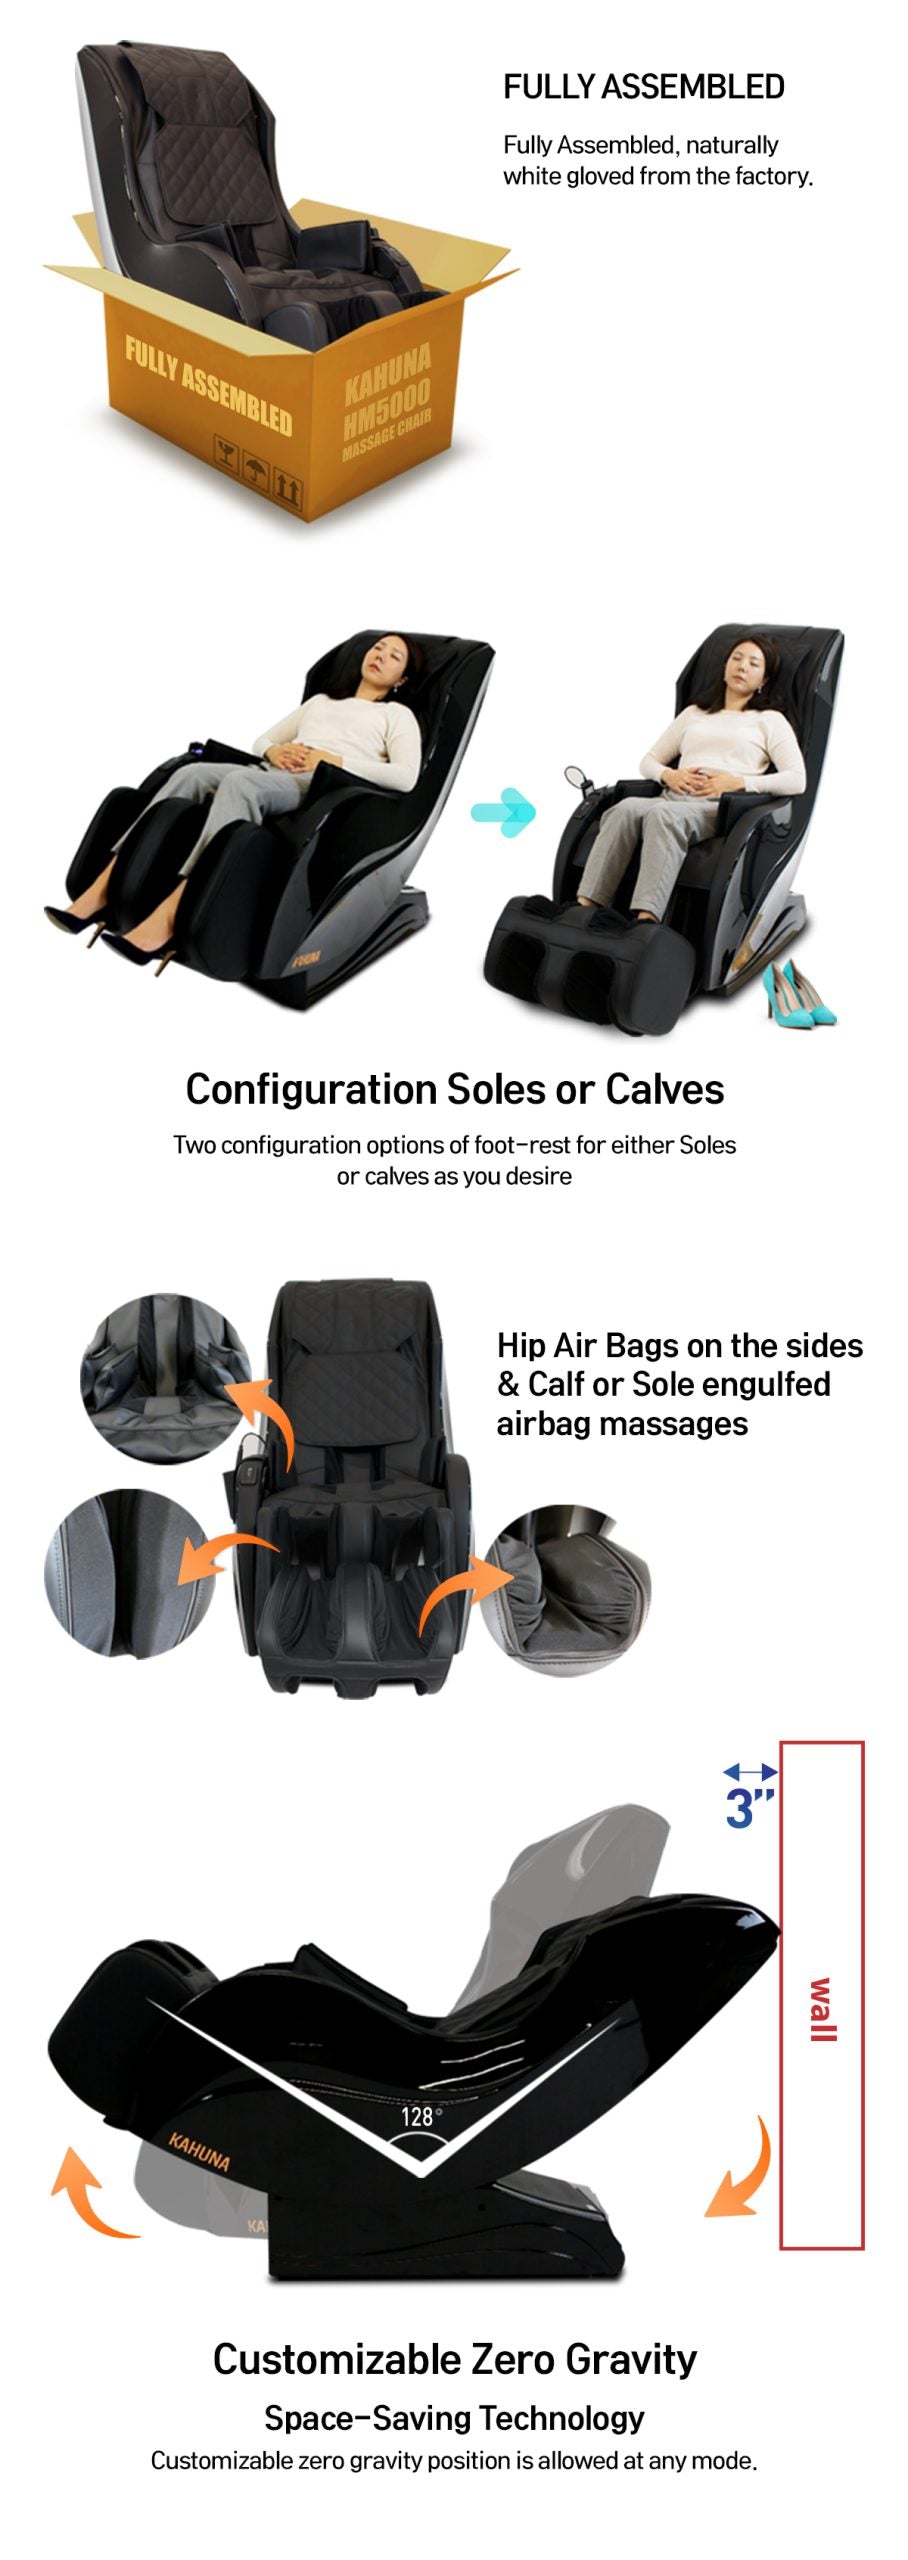 Limitless Slender HM-5000 Kahuna Massage Chair (SL-Track)